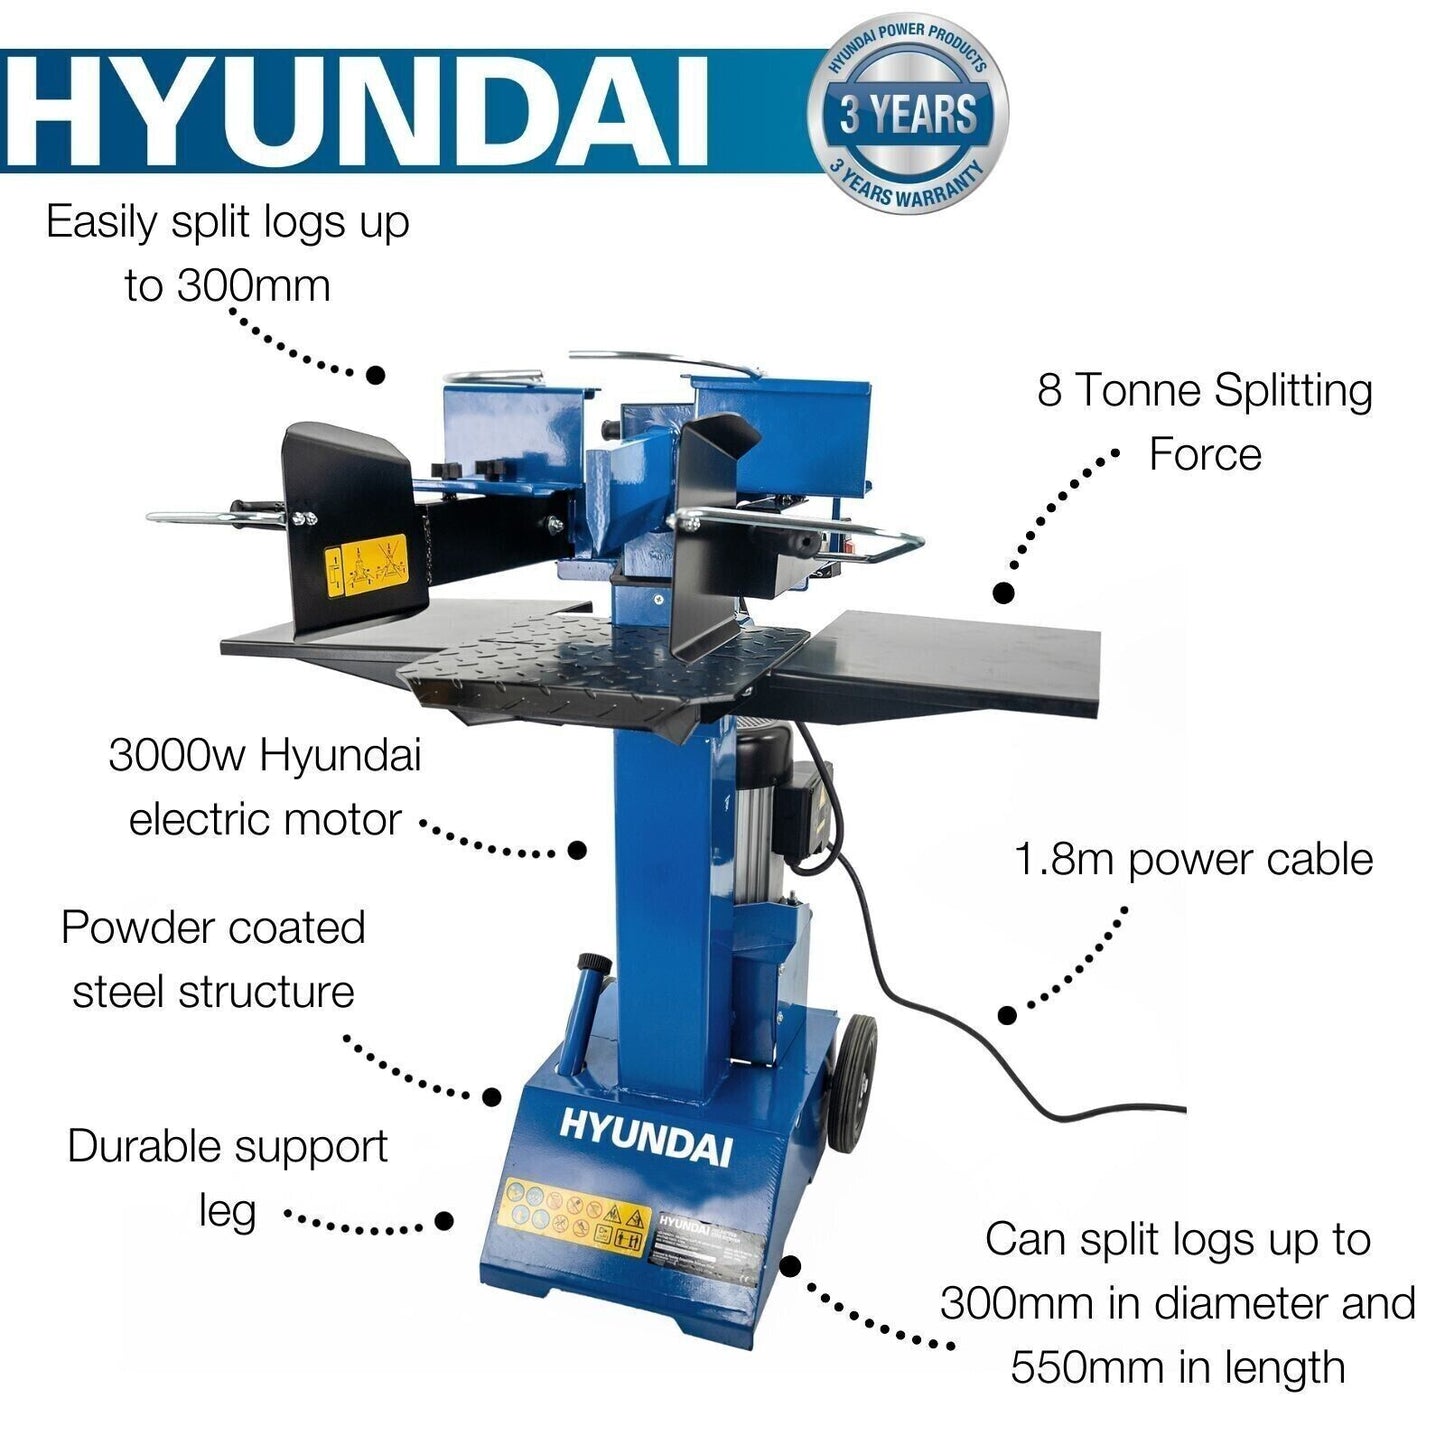 Hyundai HYLS8000VE - Electric Log Splitter 8 Tonne Vertical Hydraulic Ram 300mm